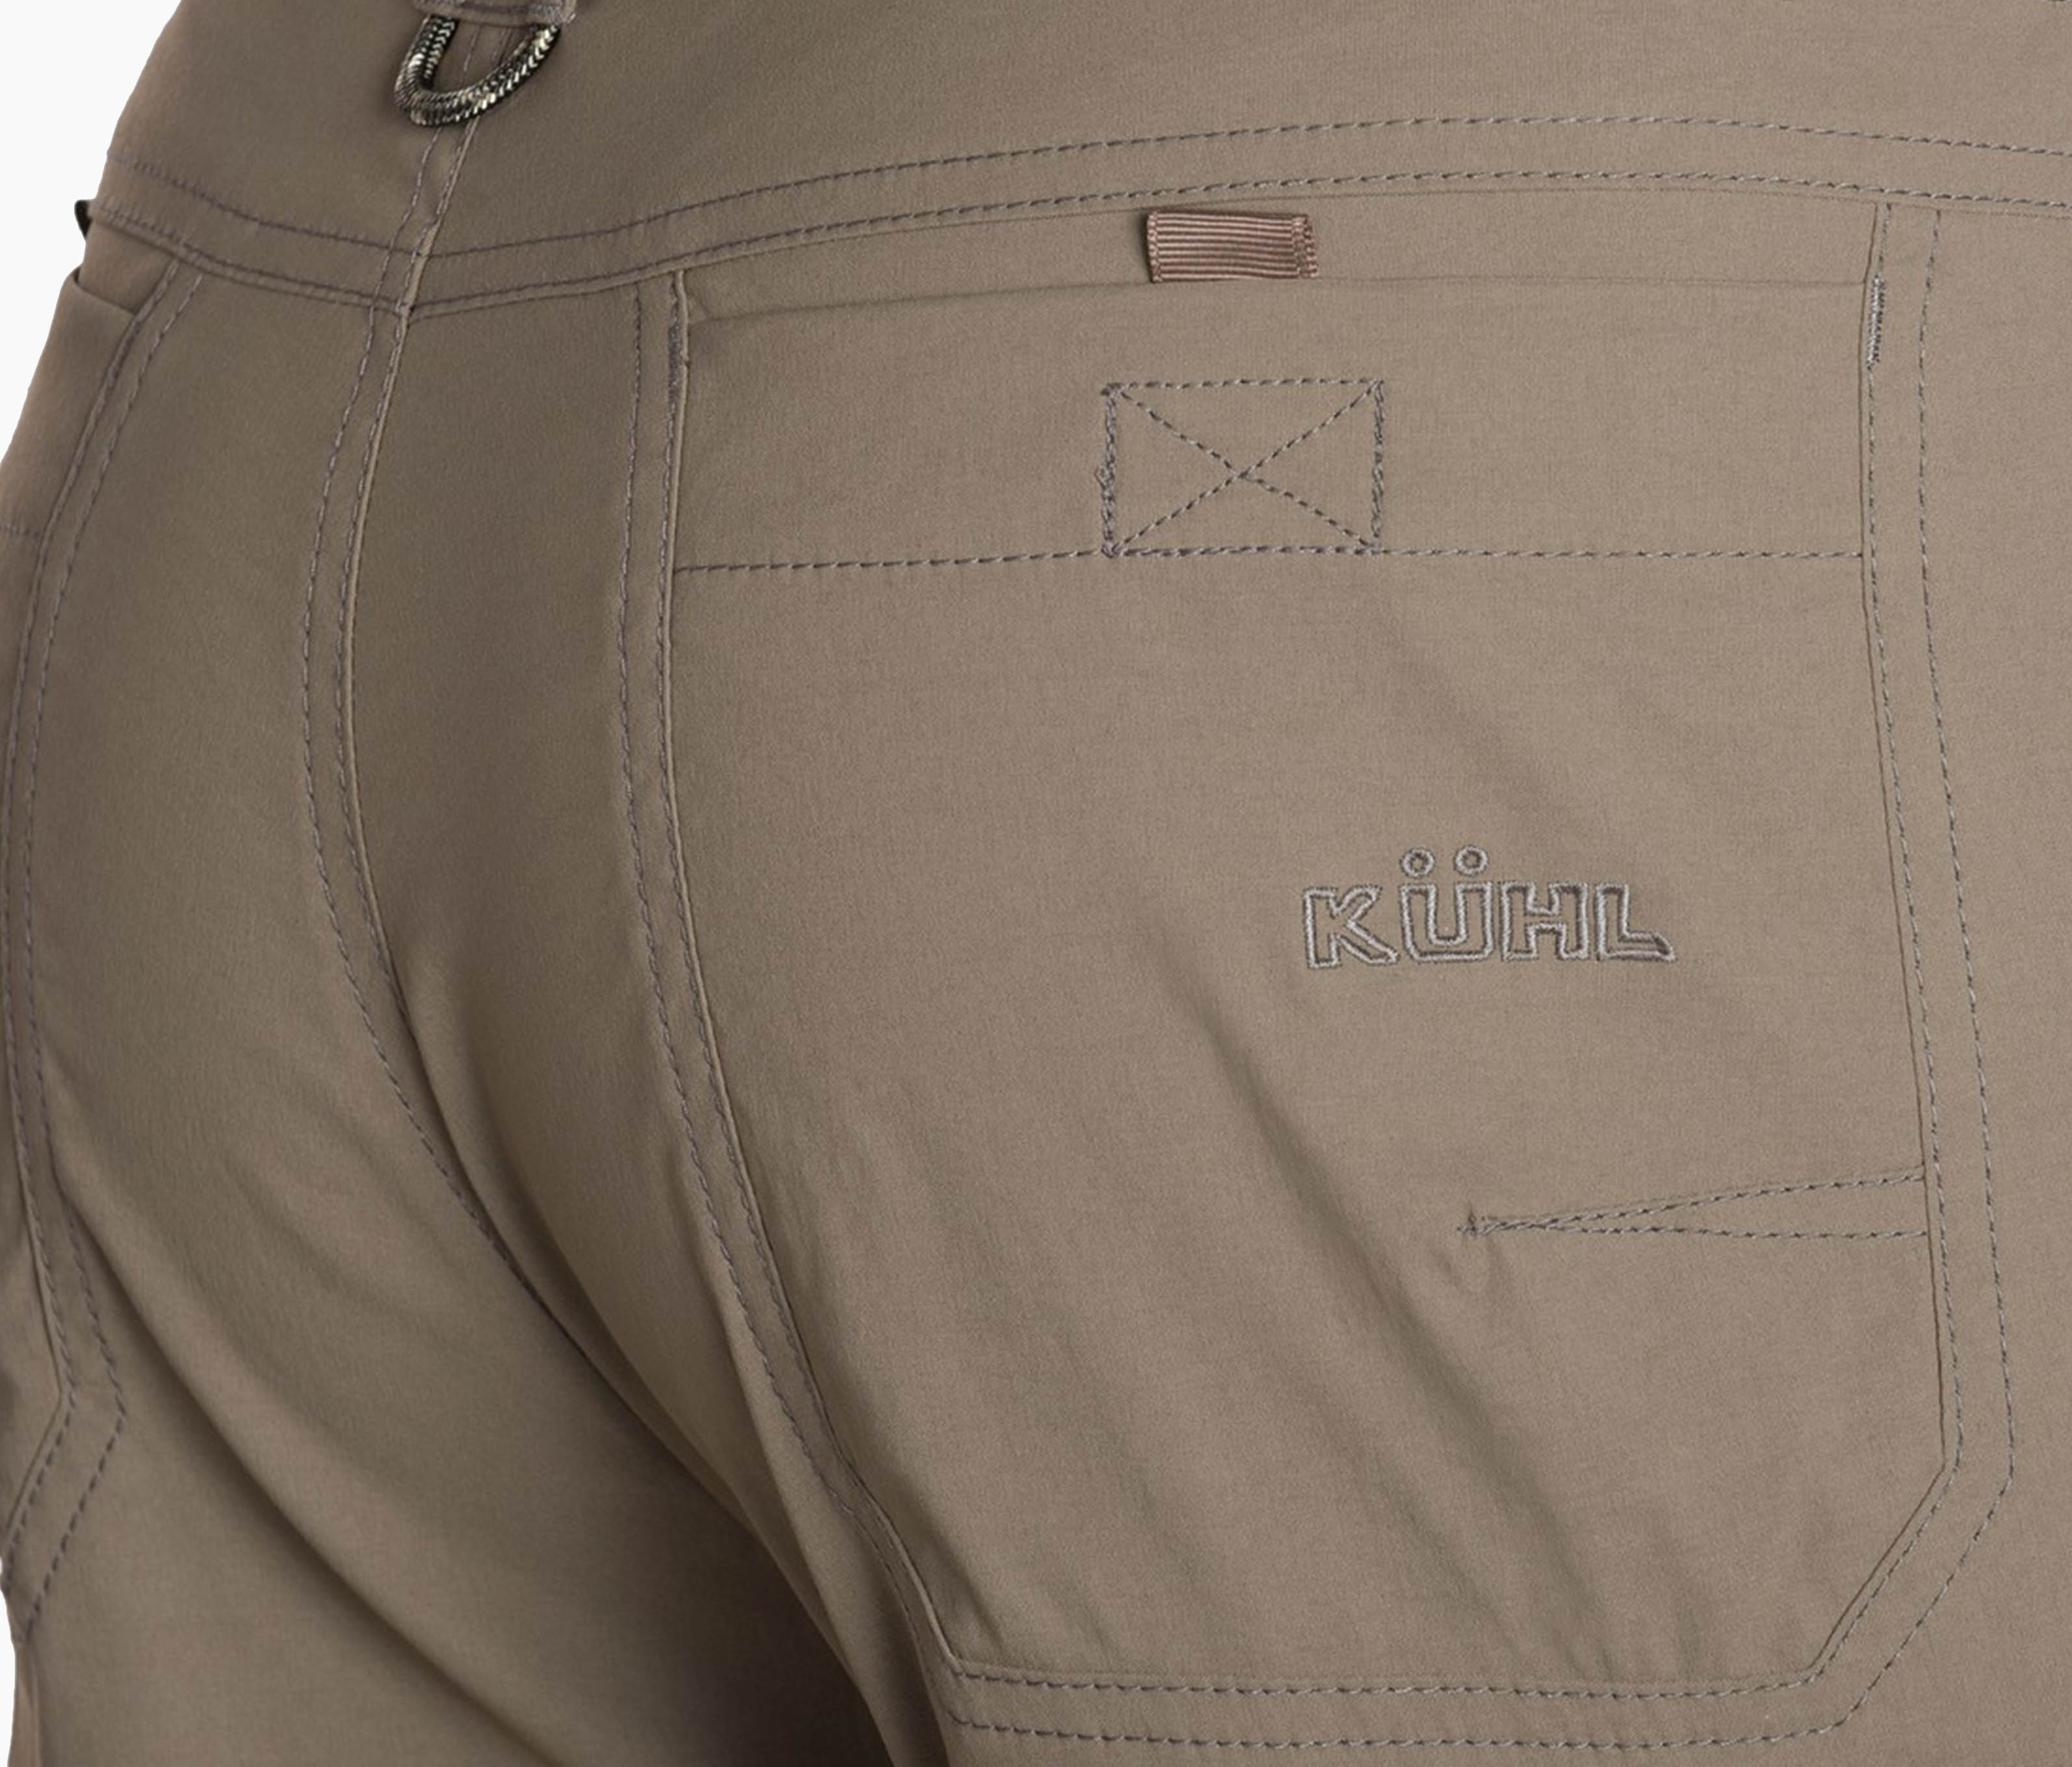 Used Kuhl Renegade Convertible Pants 30 Inseam